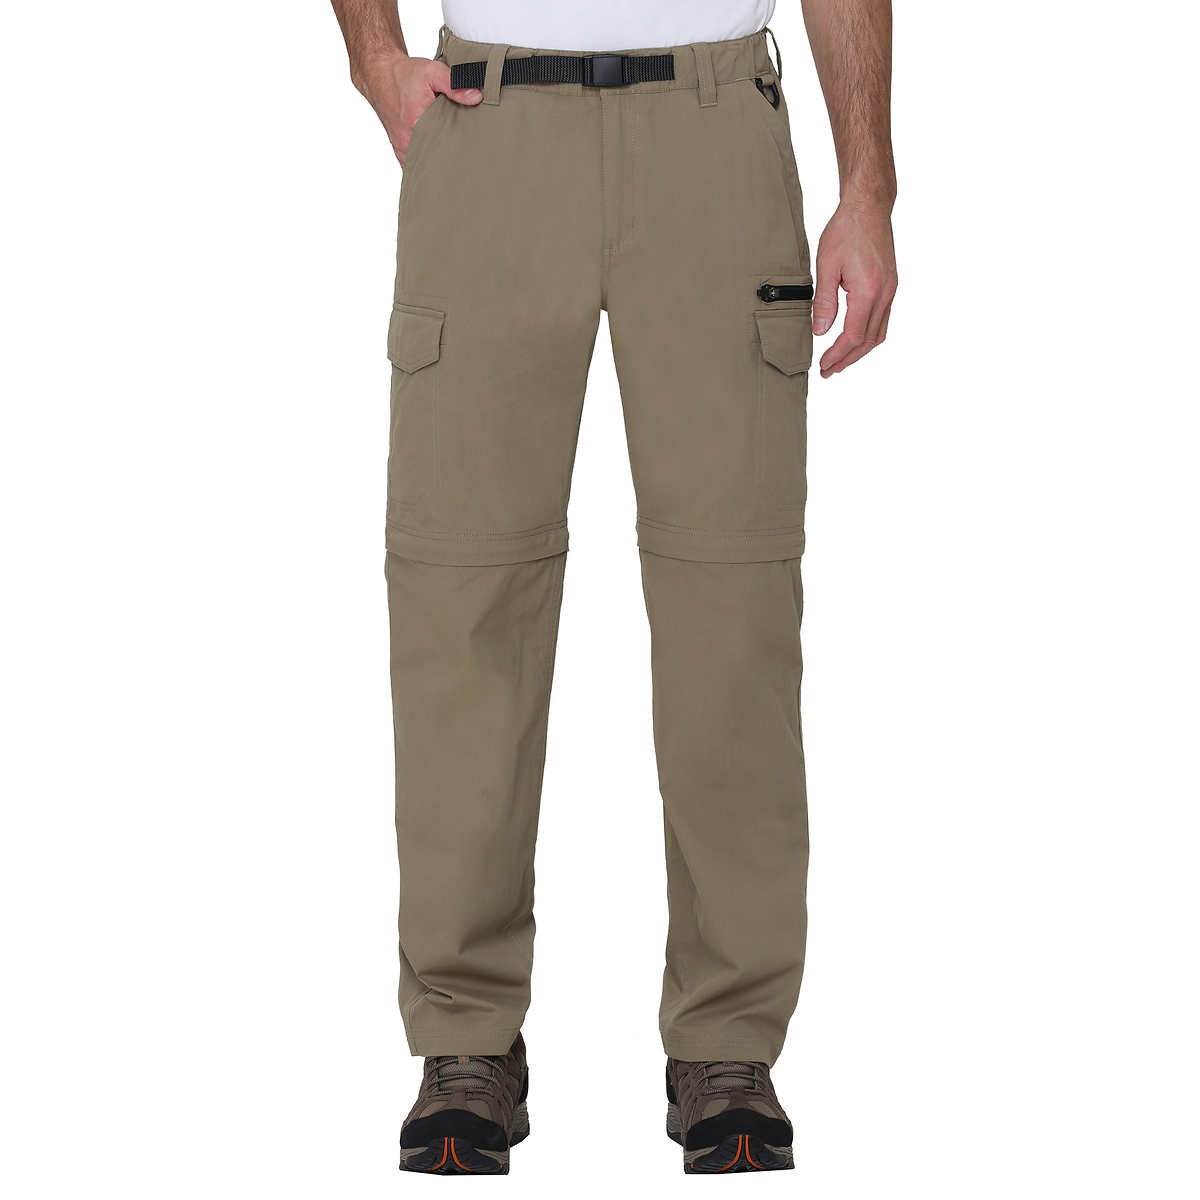 Trending Wholesale Detachable Side Pocket Pants At Affordable